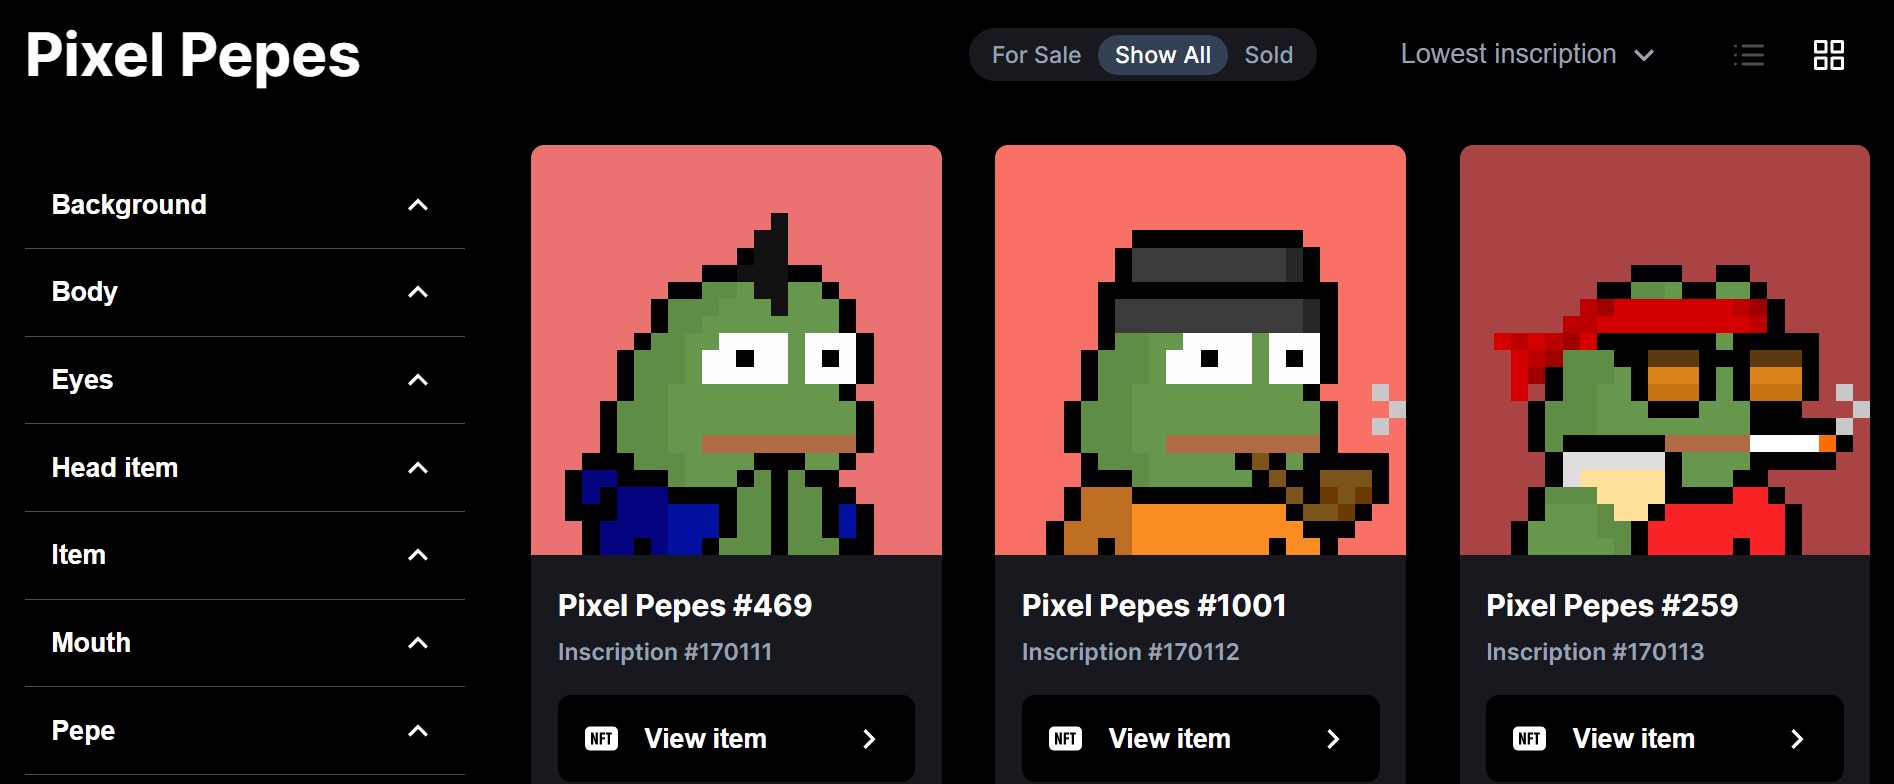 Pixel Pepes